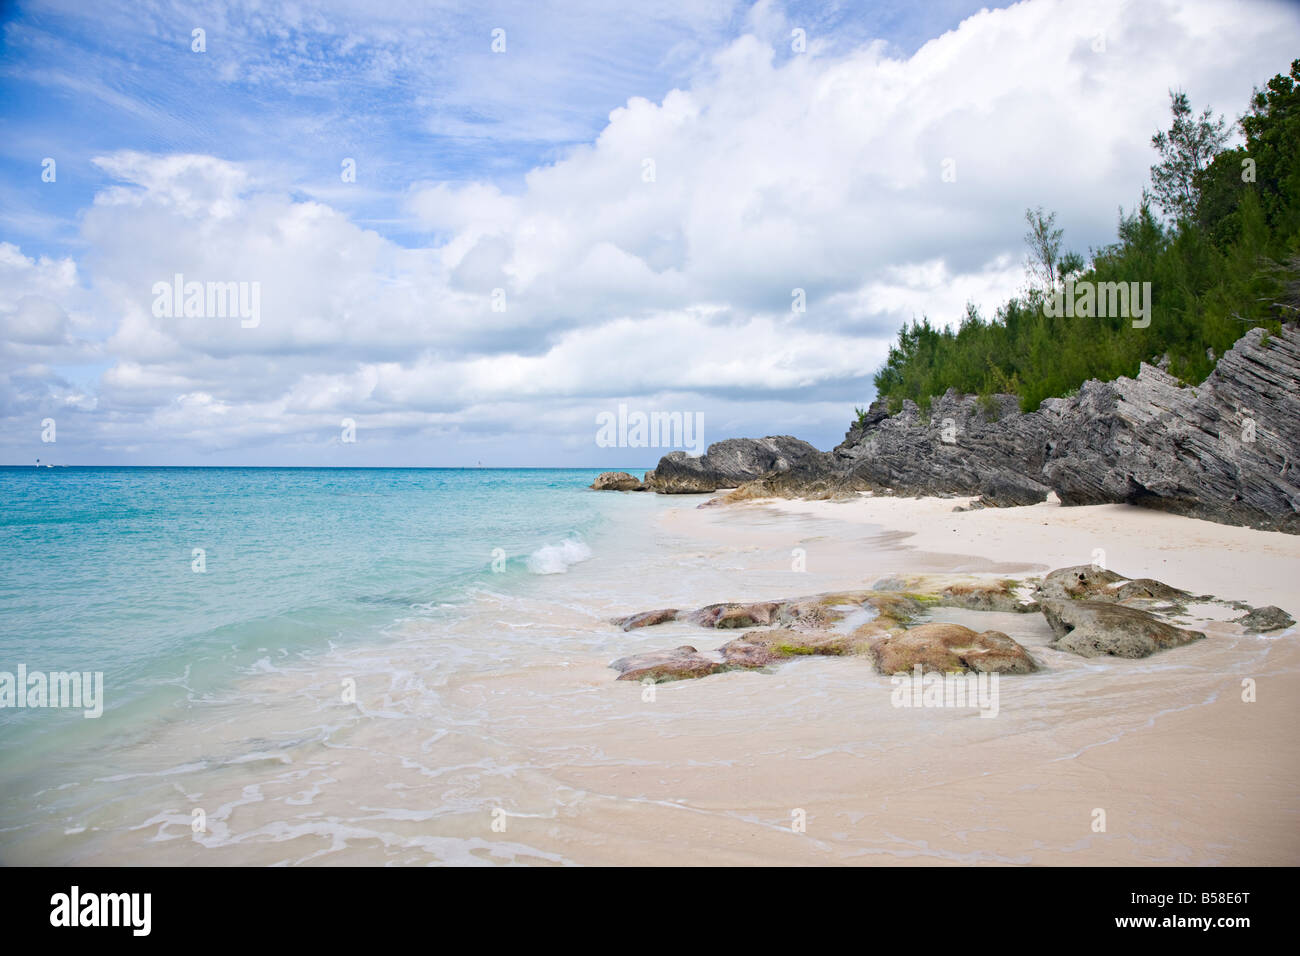 West Whale Bay Beach, Southampton, Bermuda Stock Photo